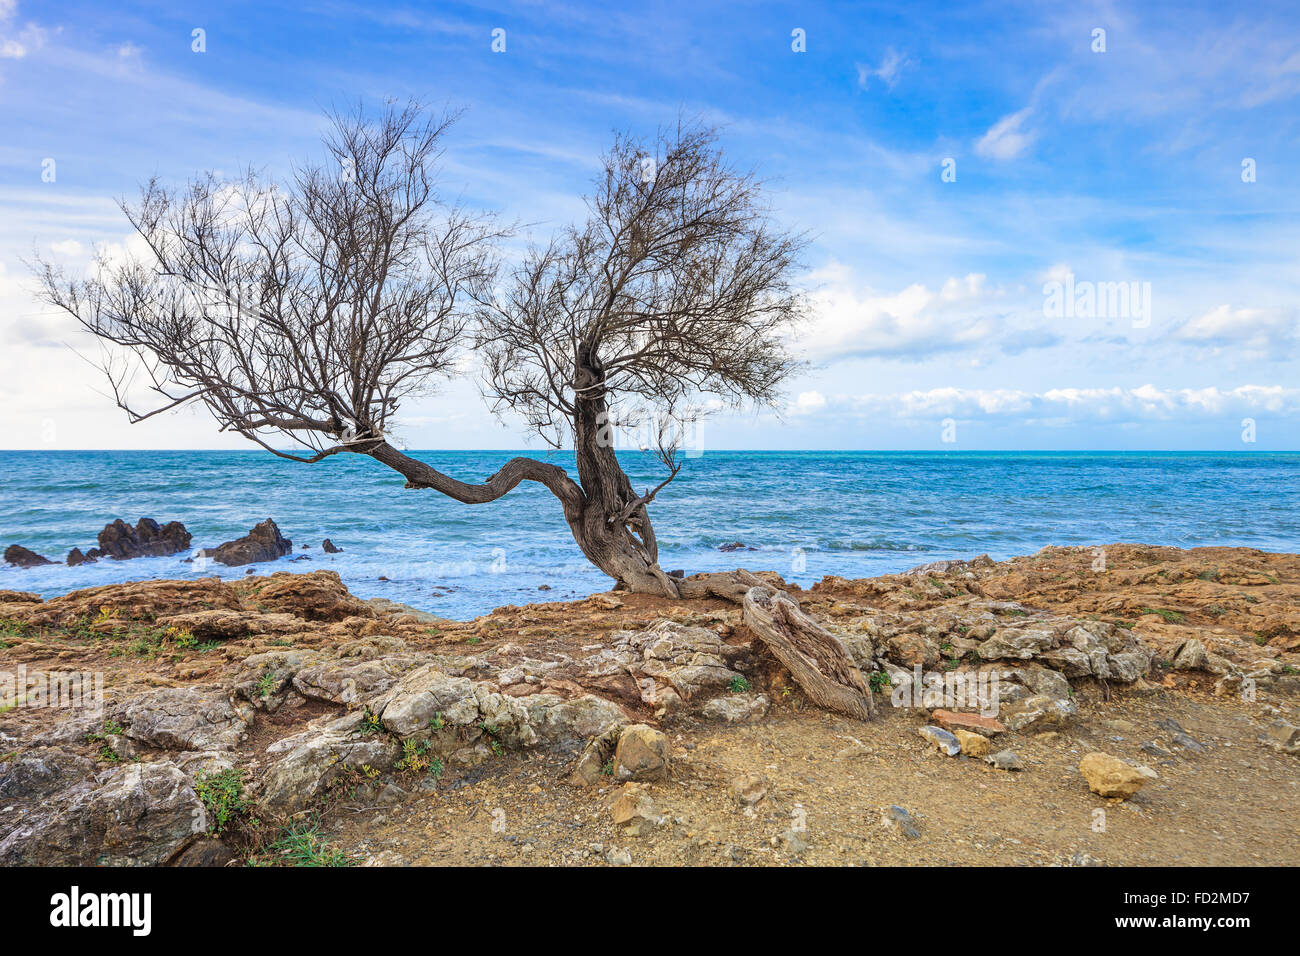 Tamarisk or salt cedar or tamarix curved tree on rock beach and blue ocean on background. Stock Photo